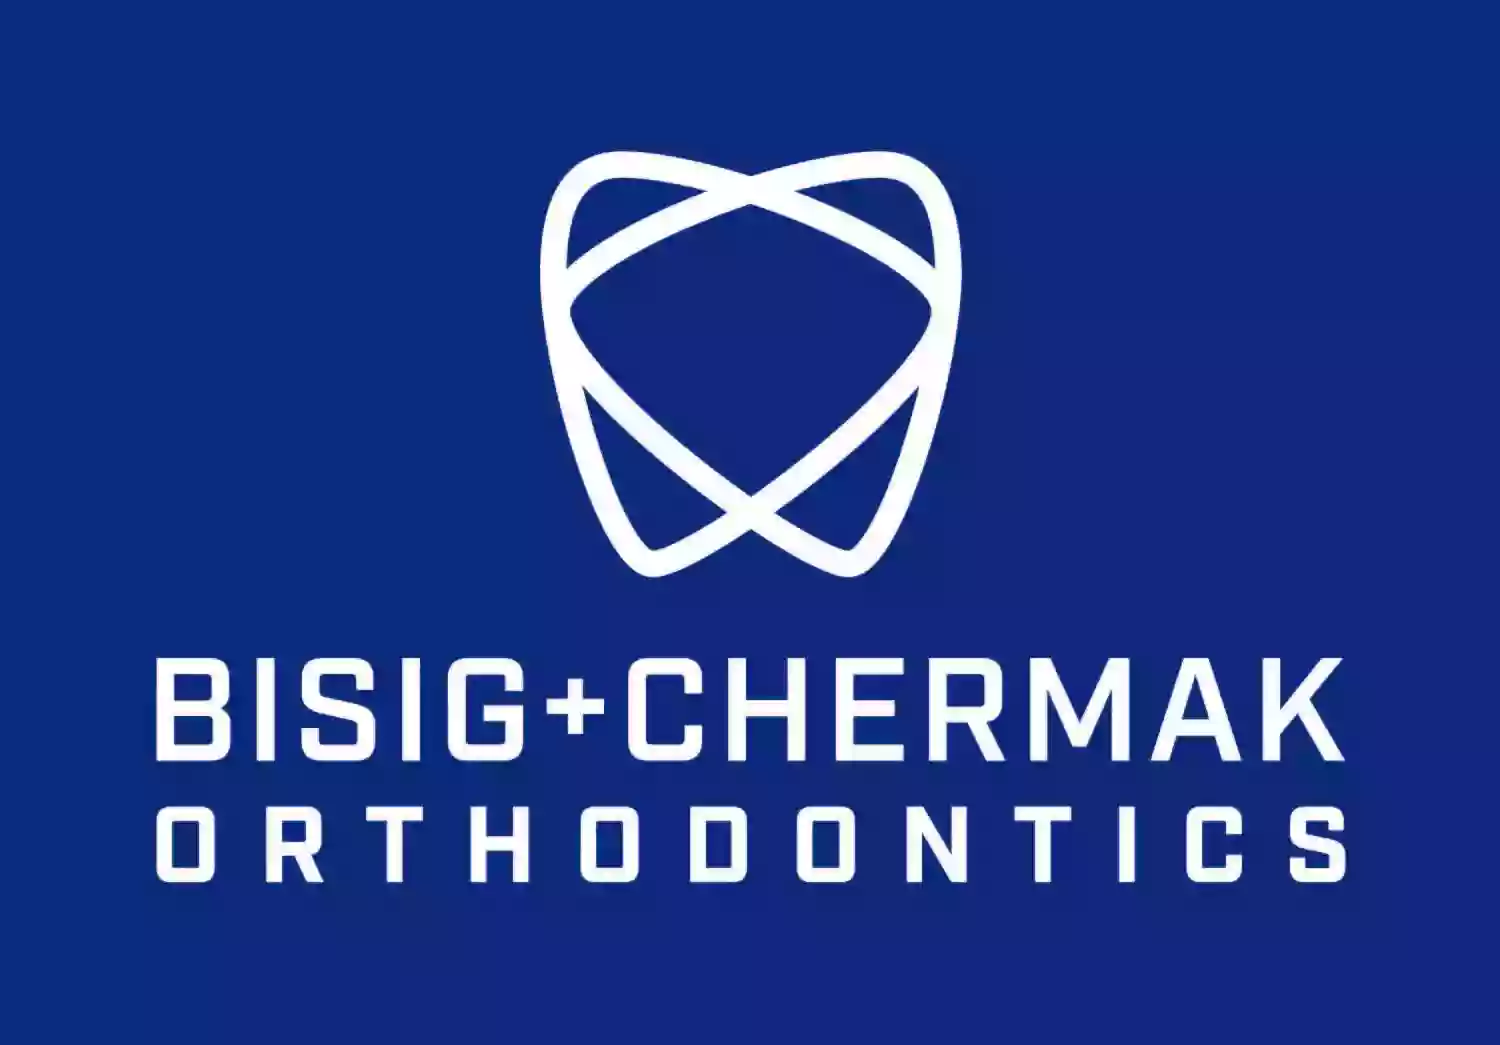 Bisig + Chermak Orthodontics